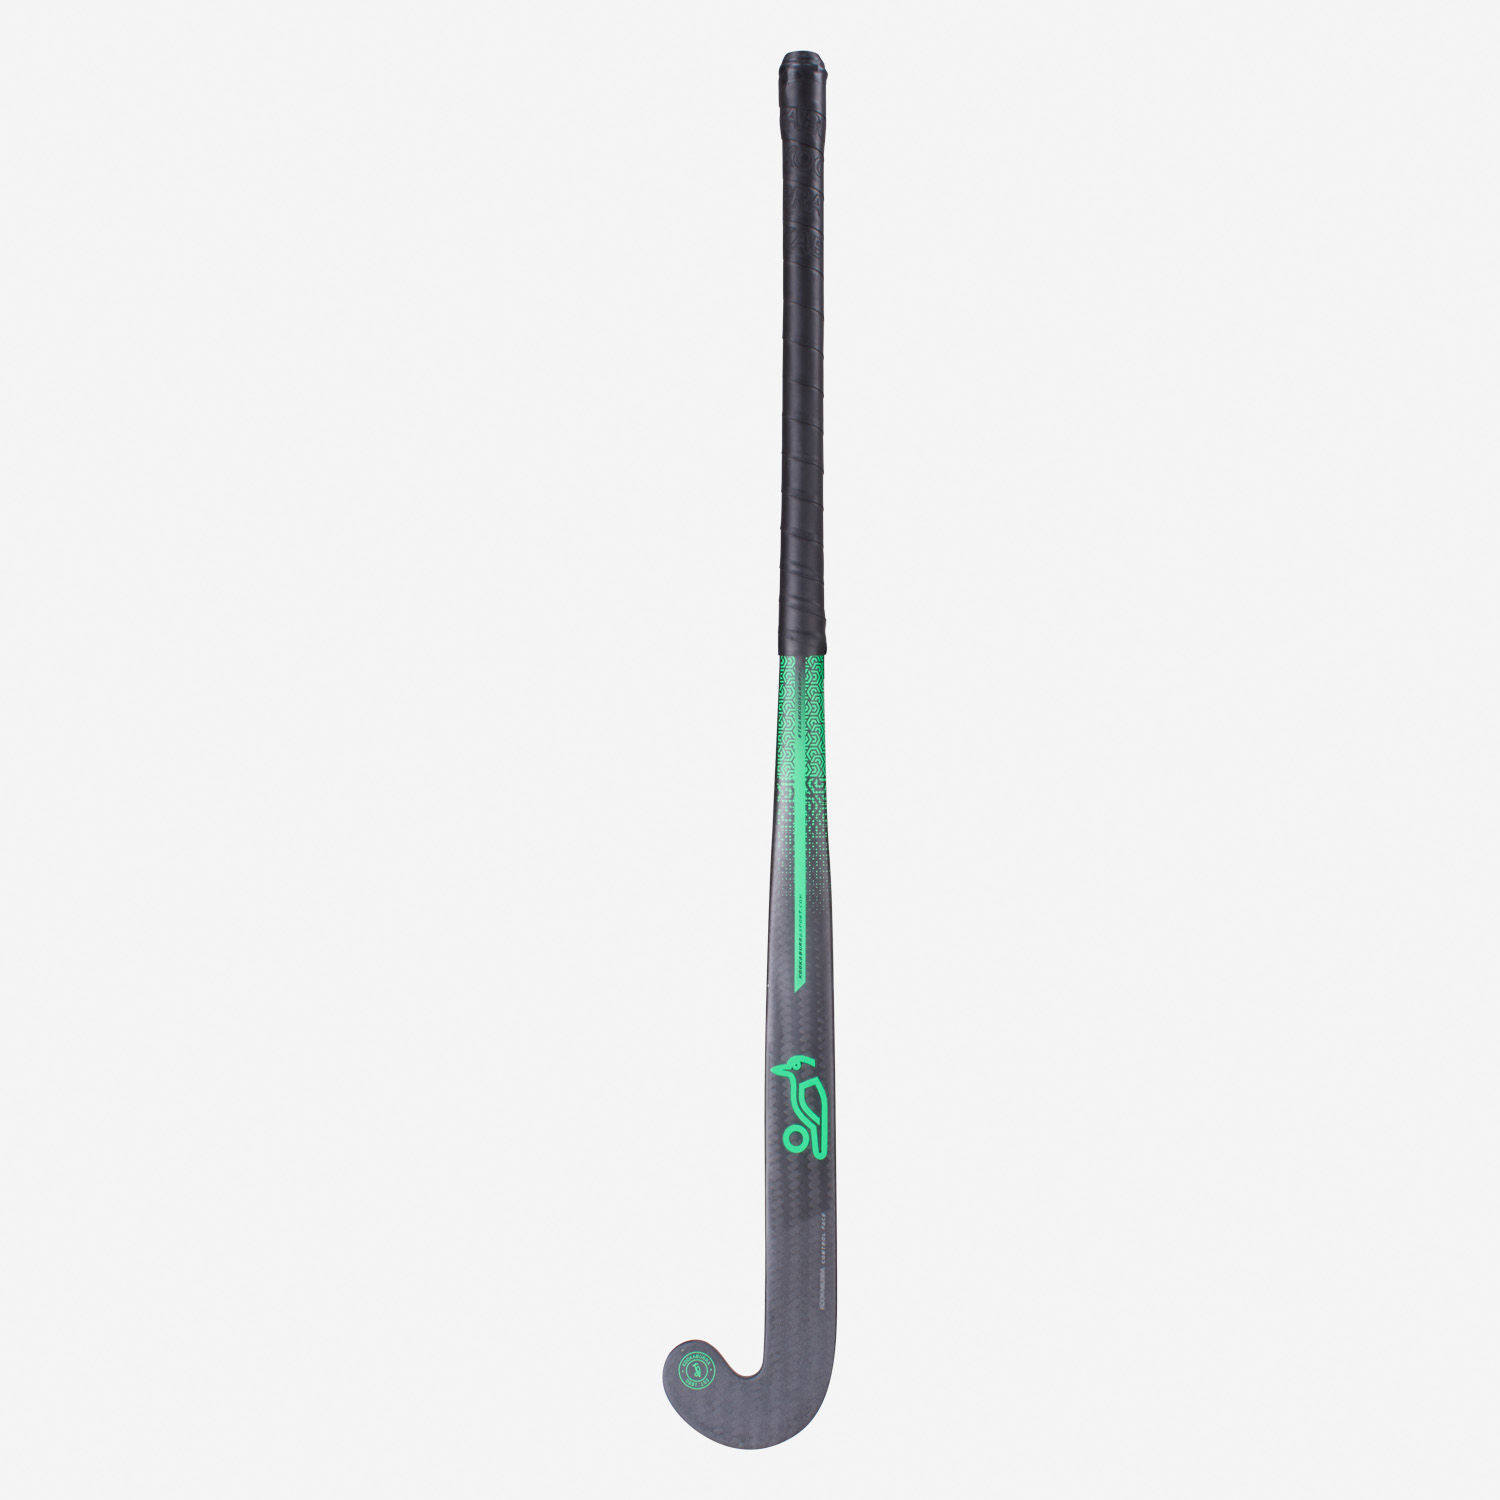 MBow Cyber Hockey Stick